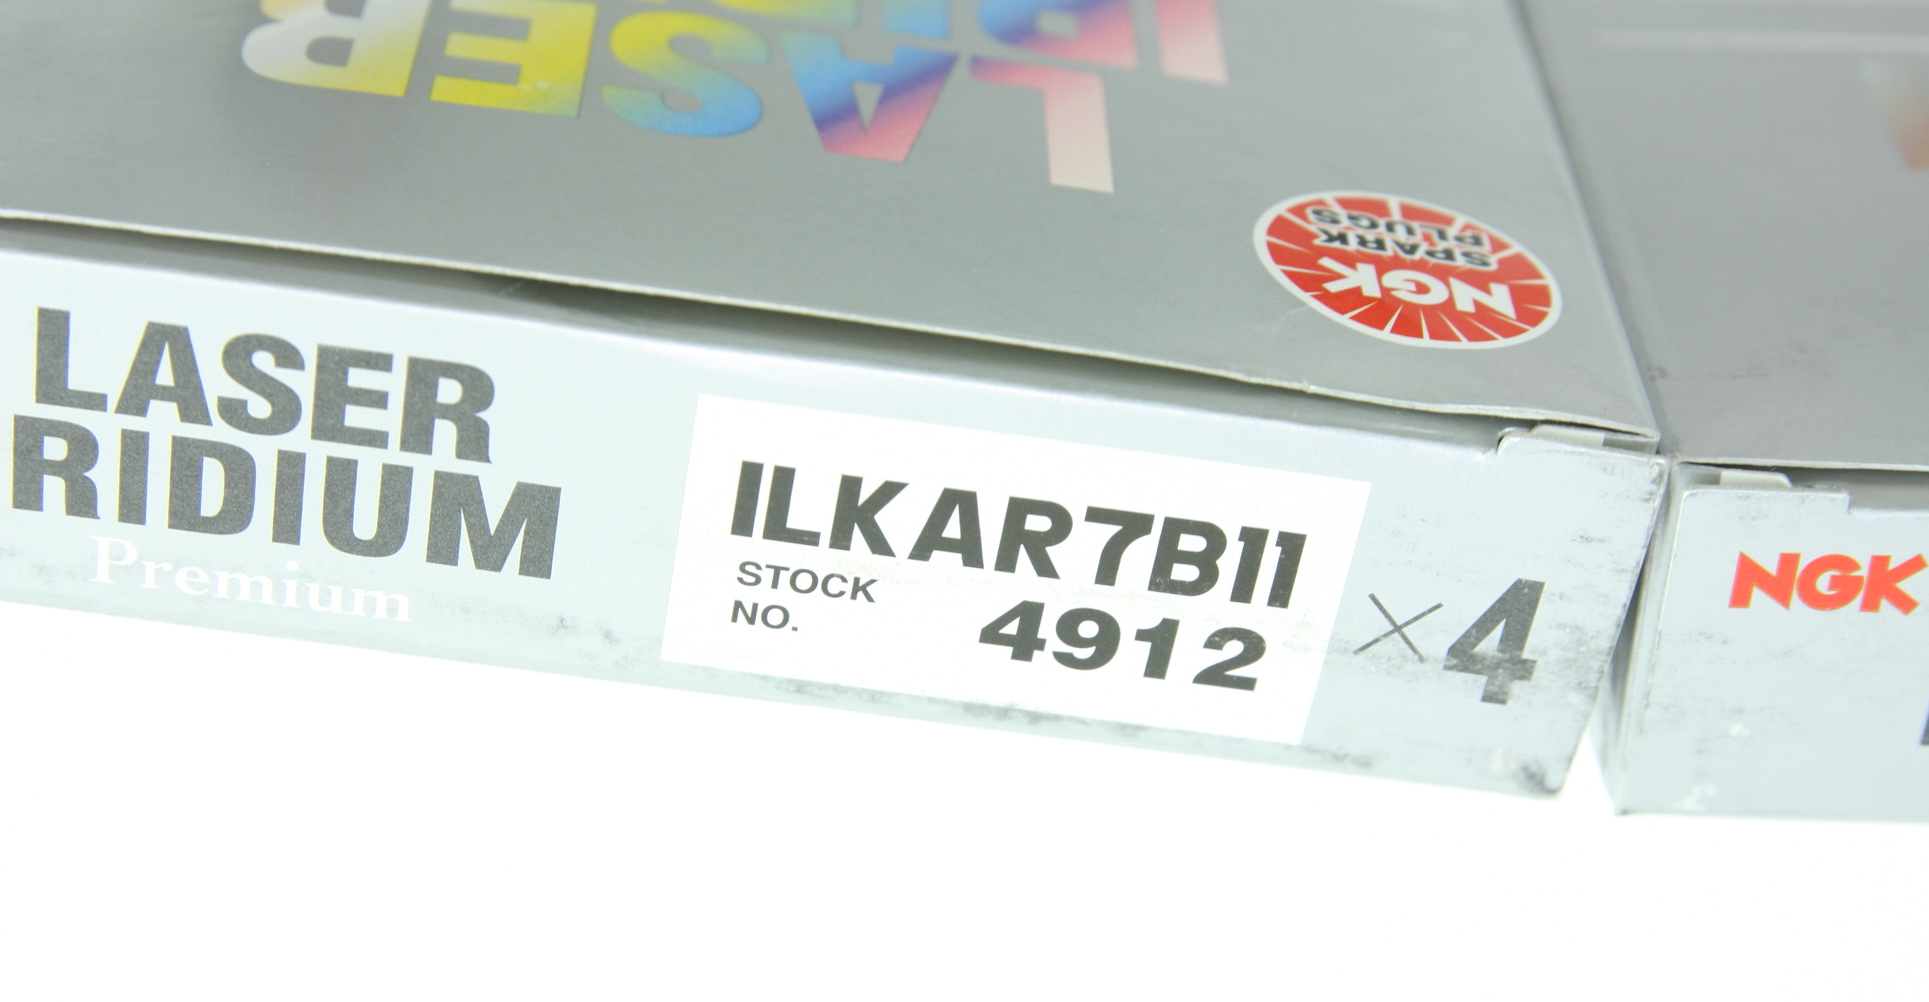 Set of 8 NGK 4912 Laser Iridium Spark Plugs ILKAR7B11 for Toyota Corolla Pontiac - image 8